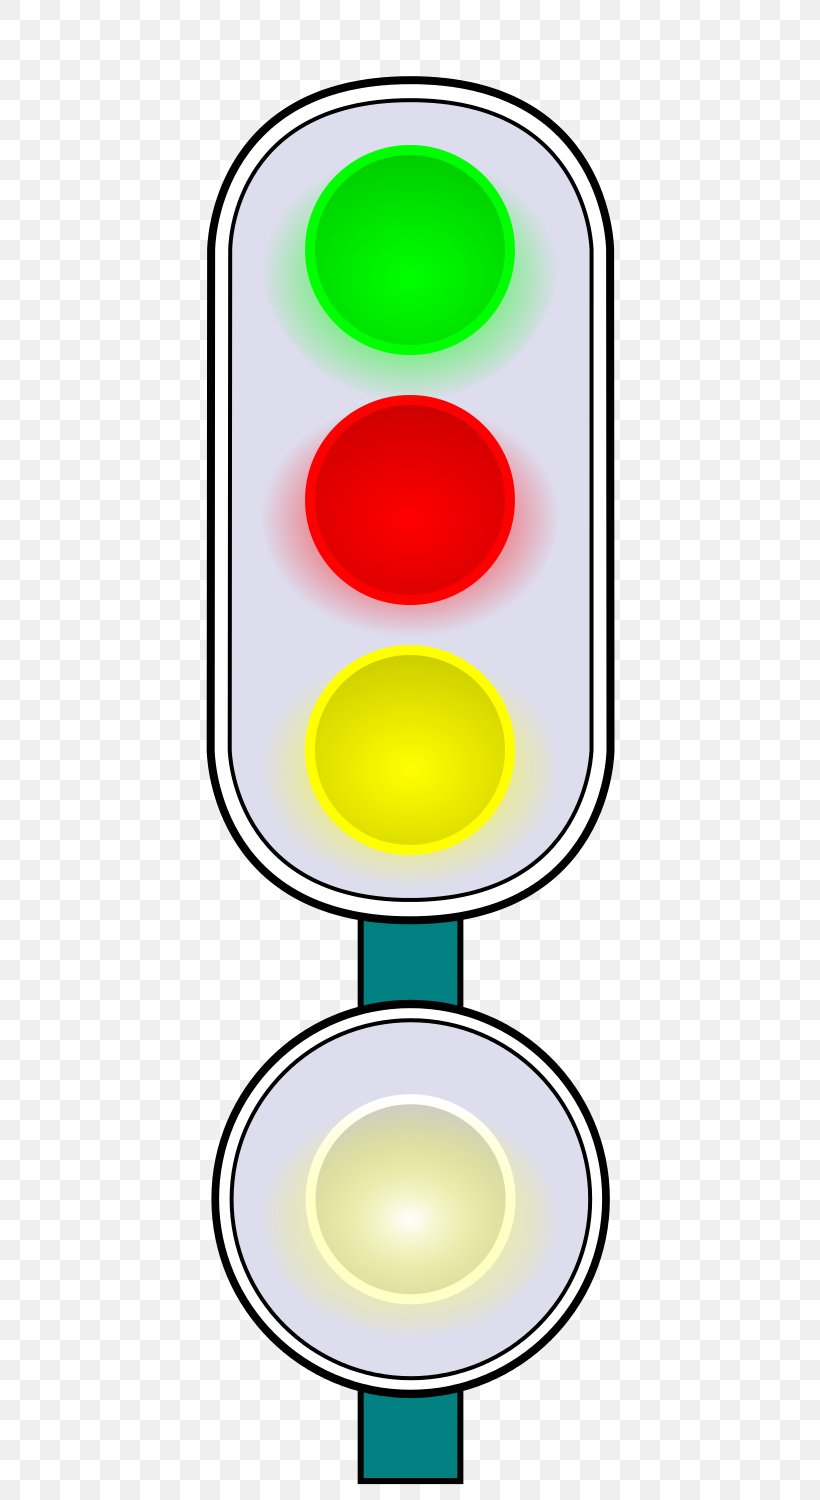 Green Traffic Light Clip Art, PNG, 600x1500px, Green, Traffic, Traffic Light Download Free